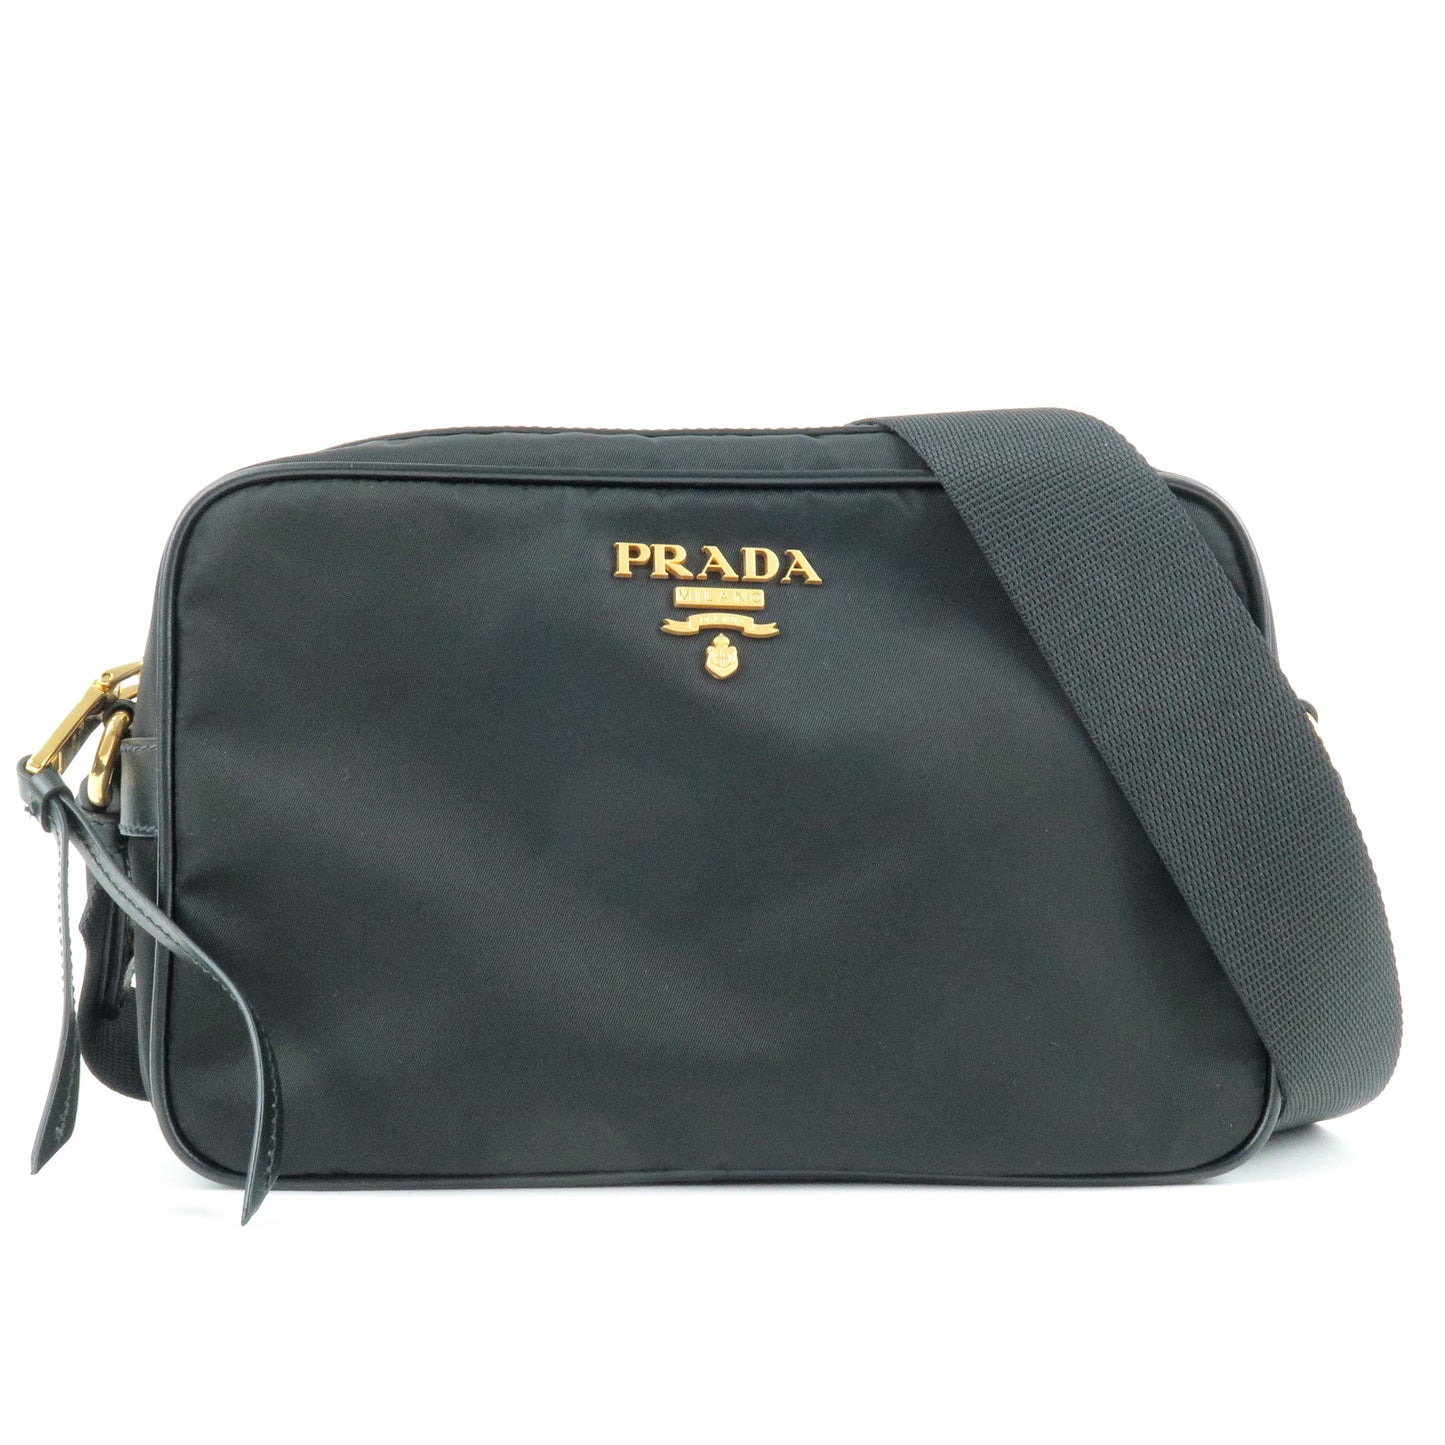 PRADA-Logo-Nylon-Leather-Shoulder-Bag-NERO-Black-1BH089